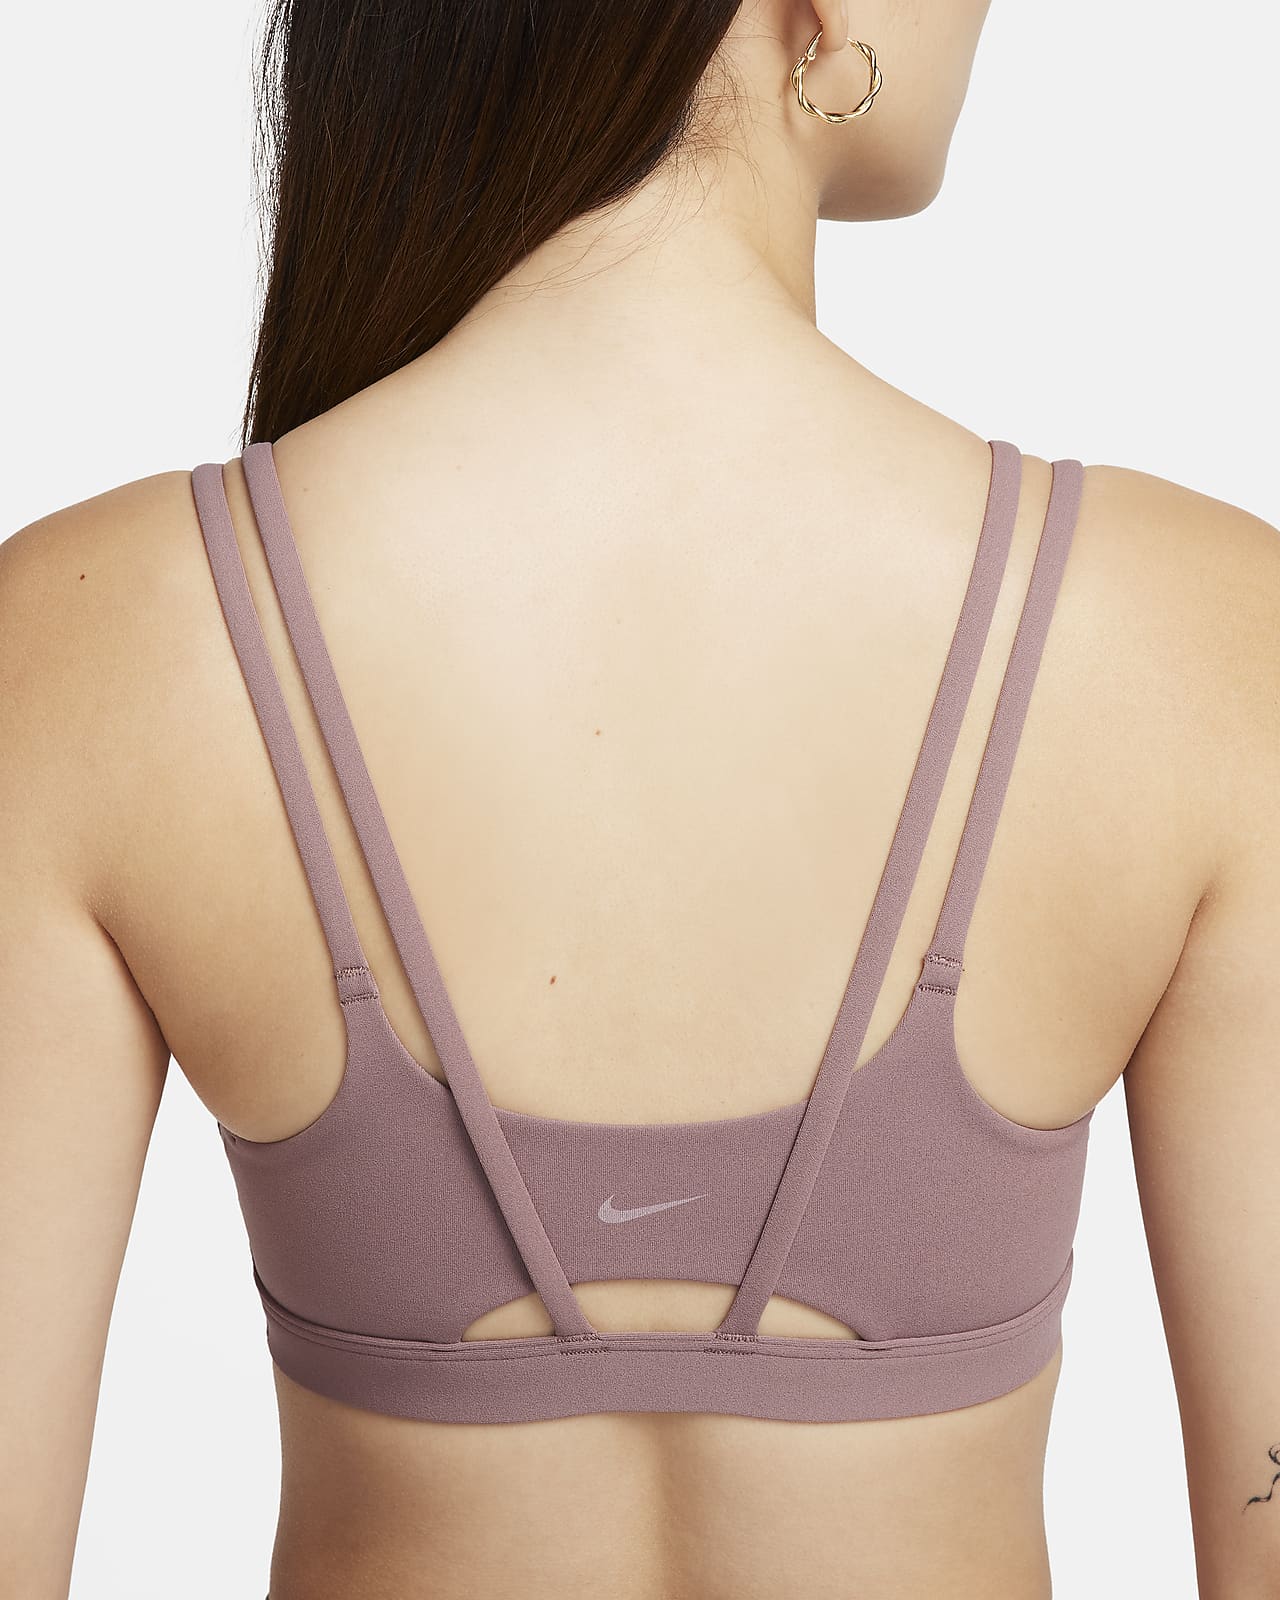 Nike Women's Infinity Medium Support Sports Bra White Black BV3703-100 at   Women's Clothing store